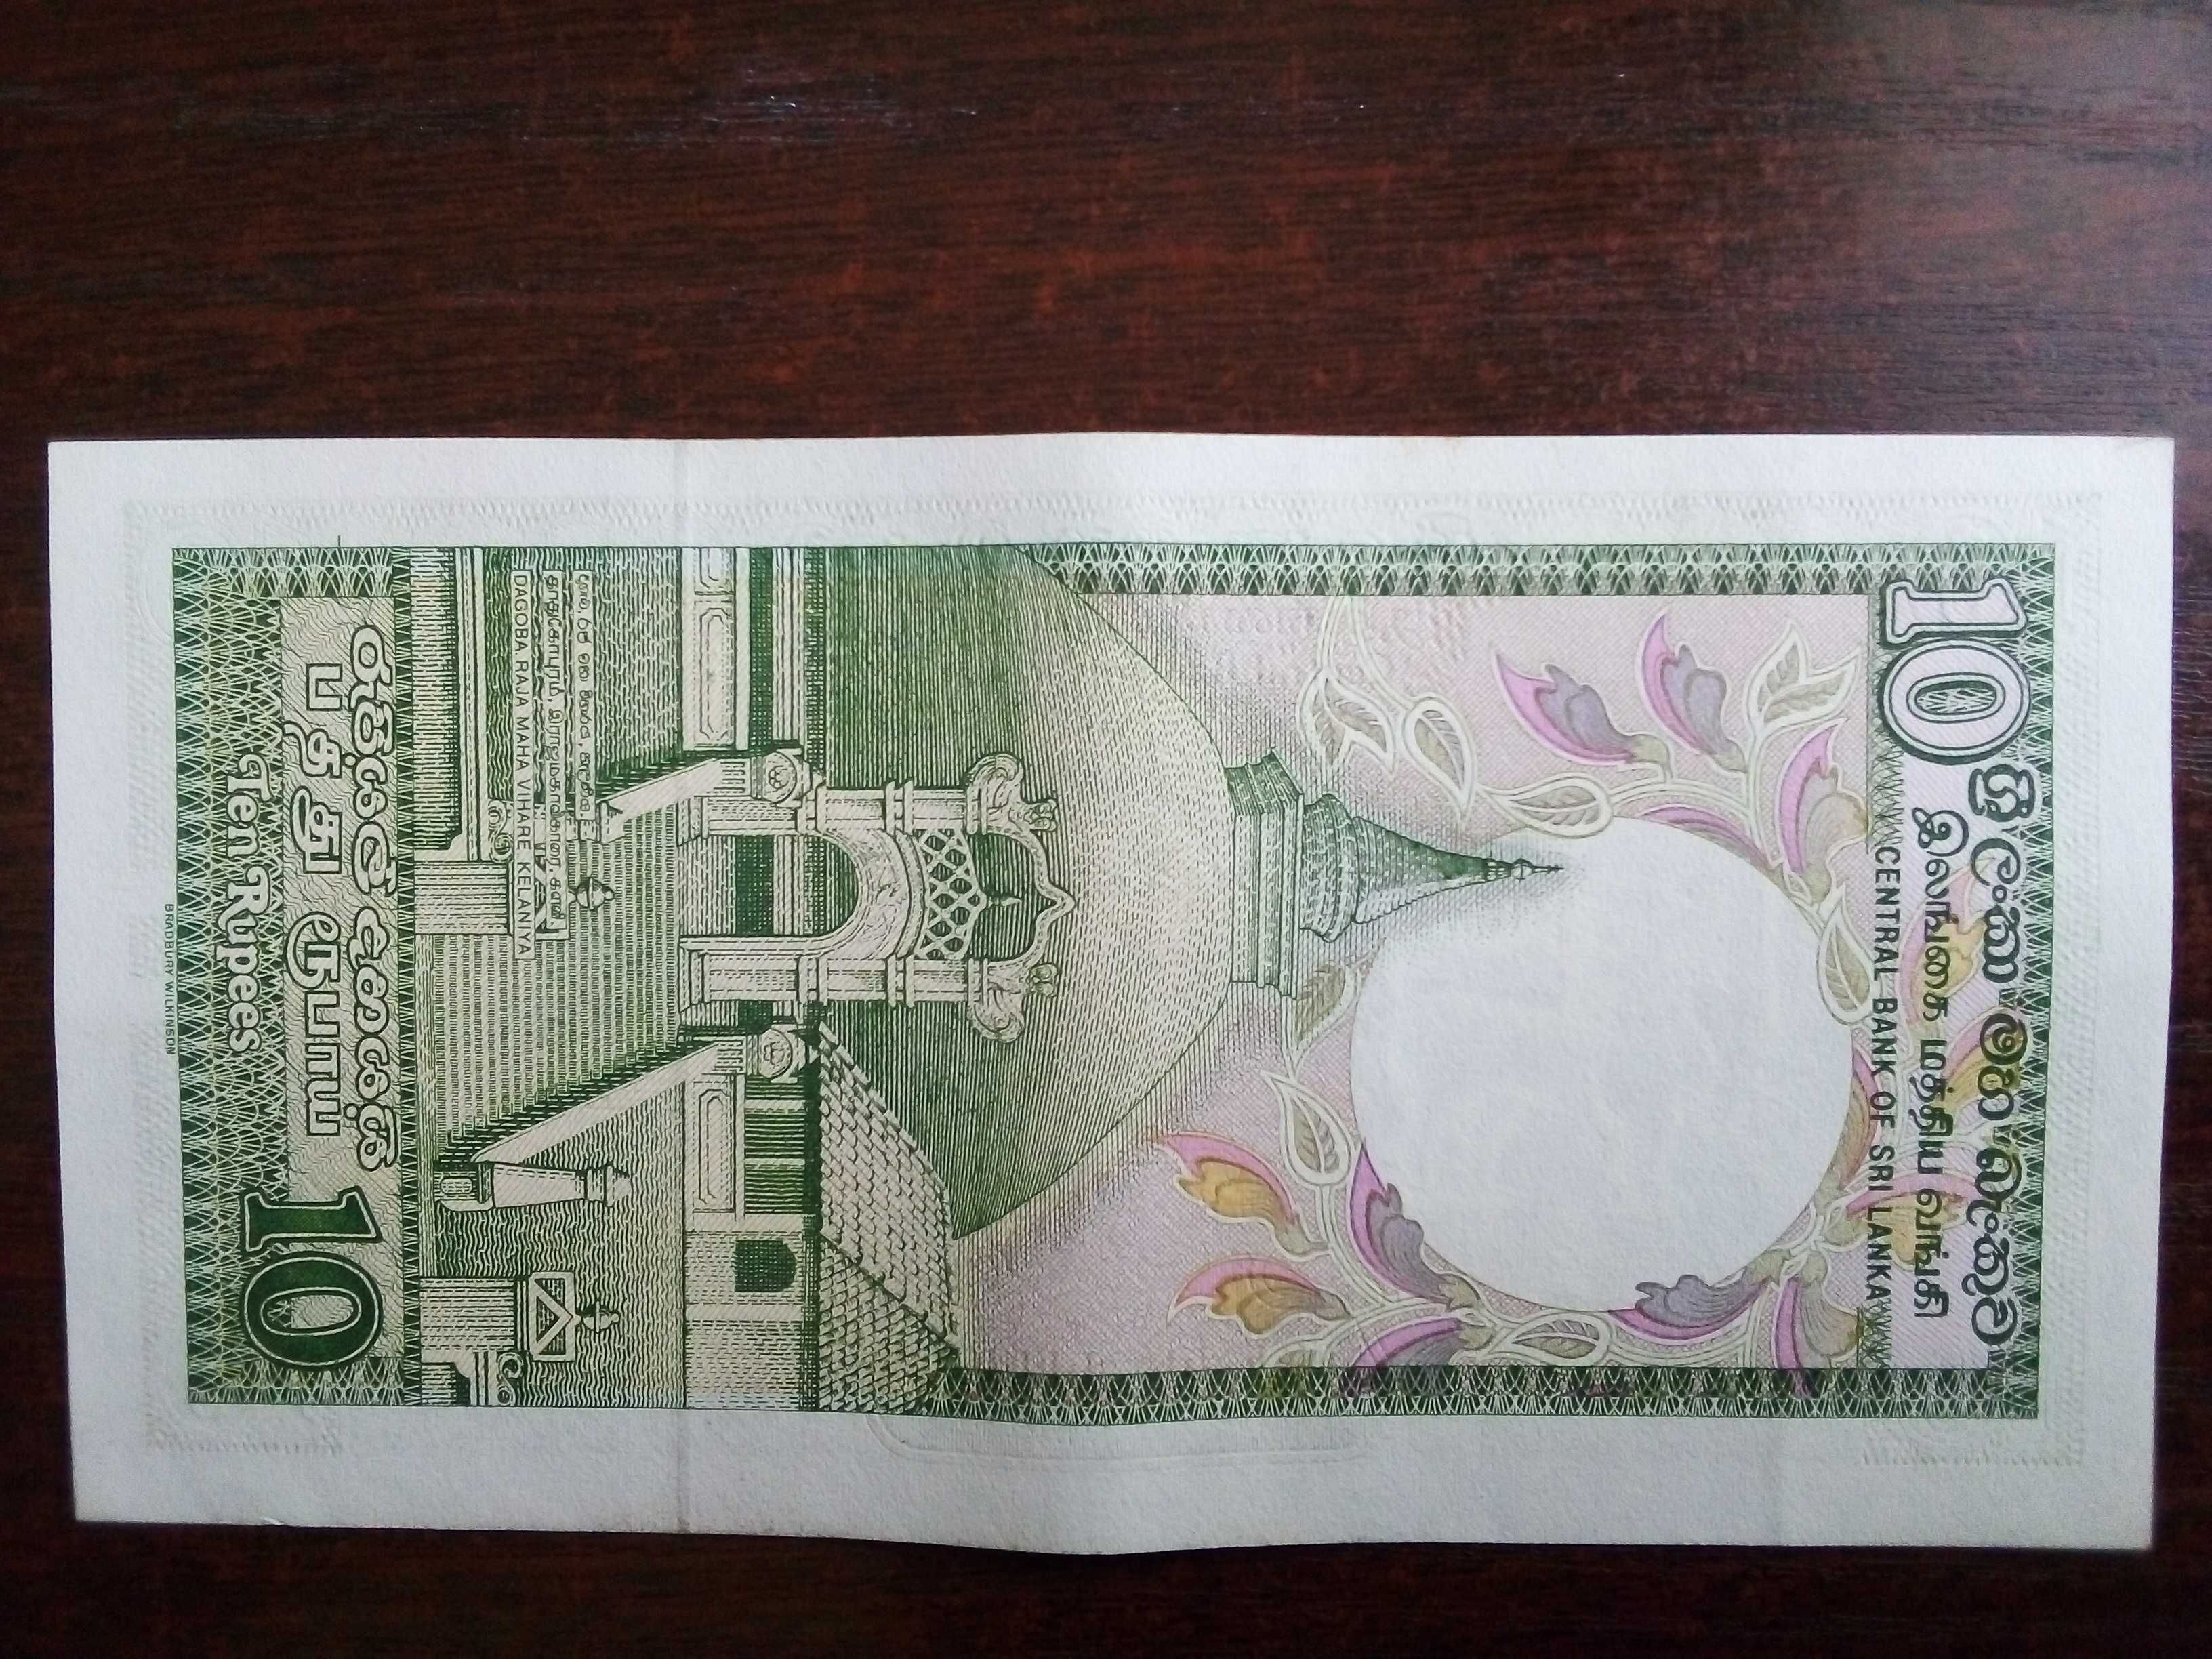 Banknot 10 rupii Sri Lanka